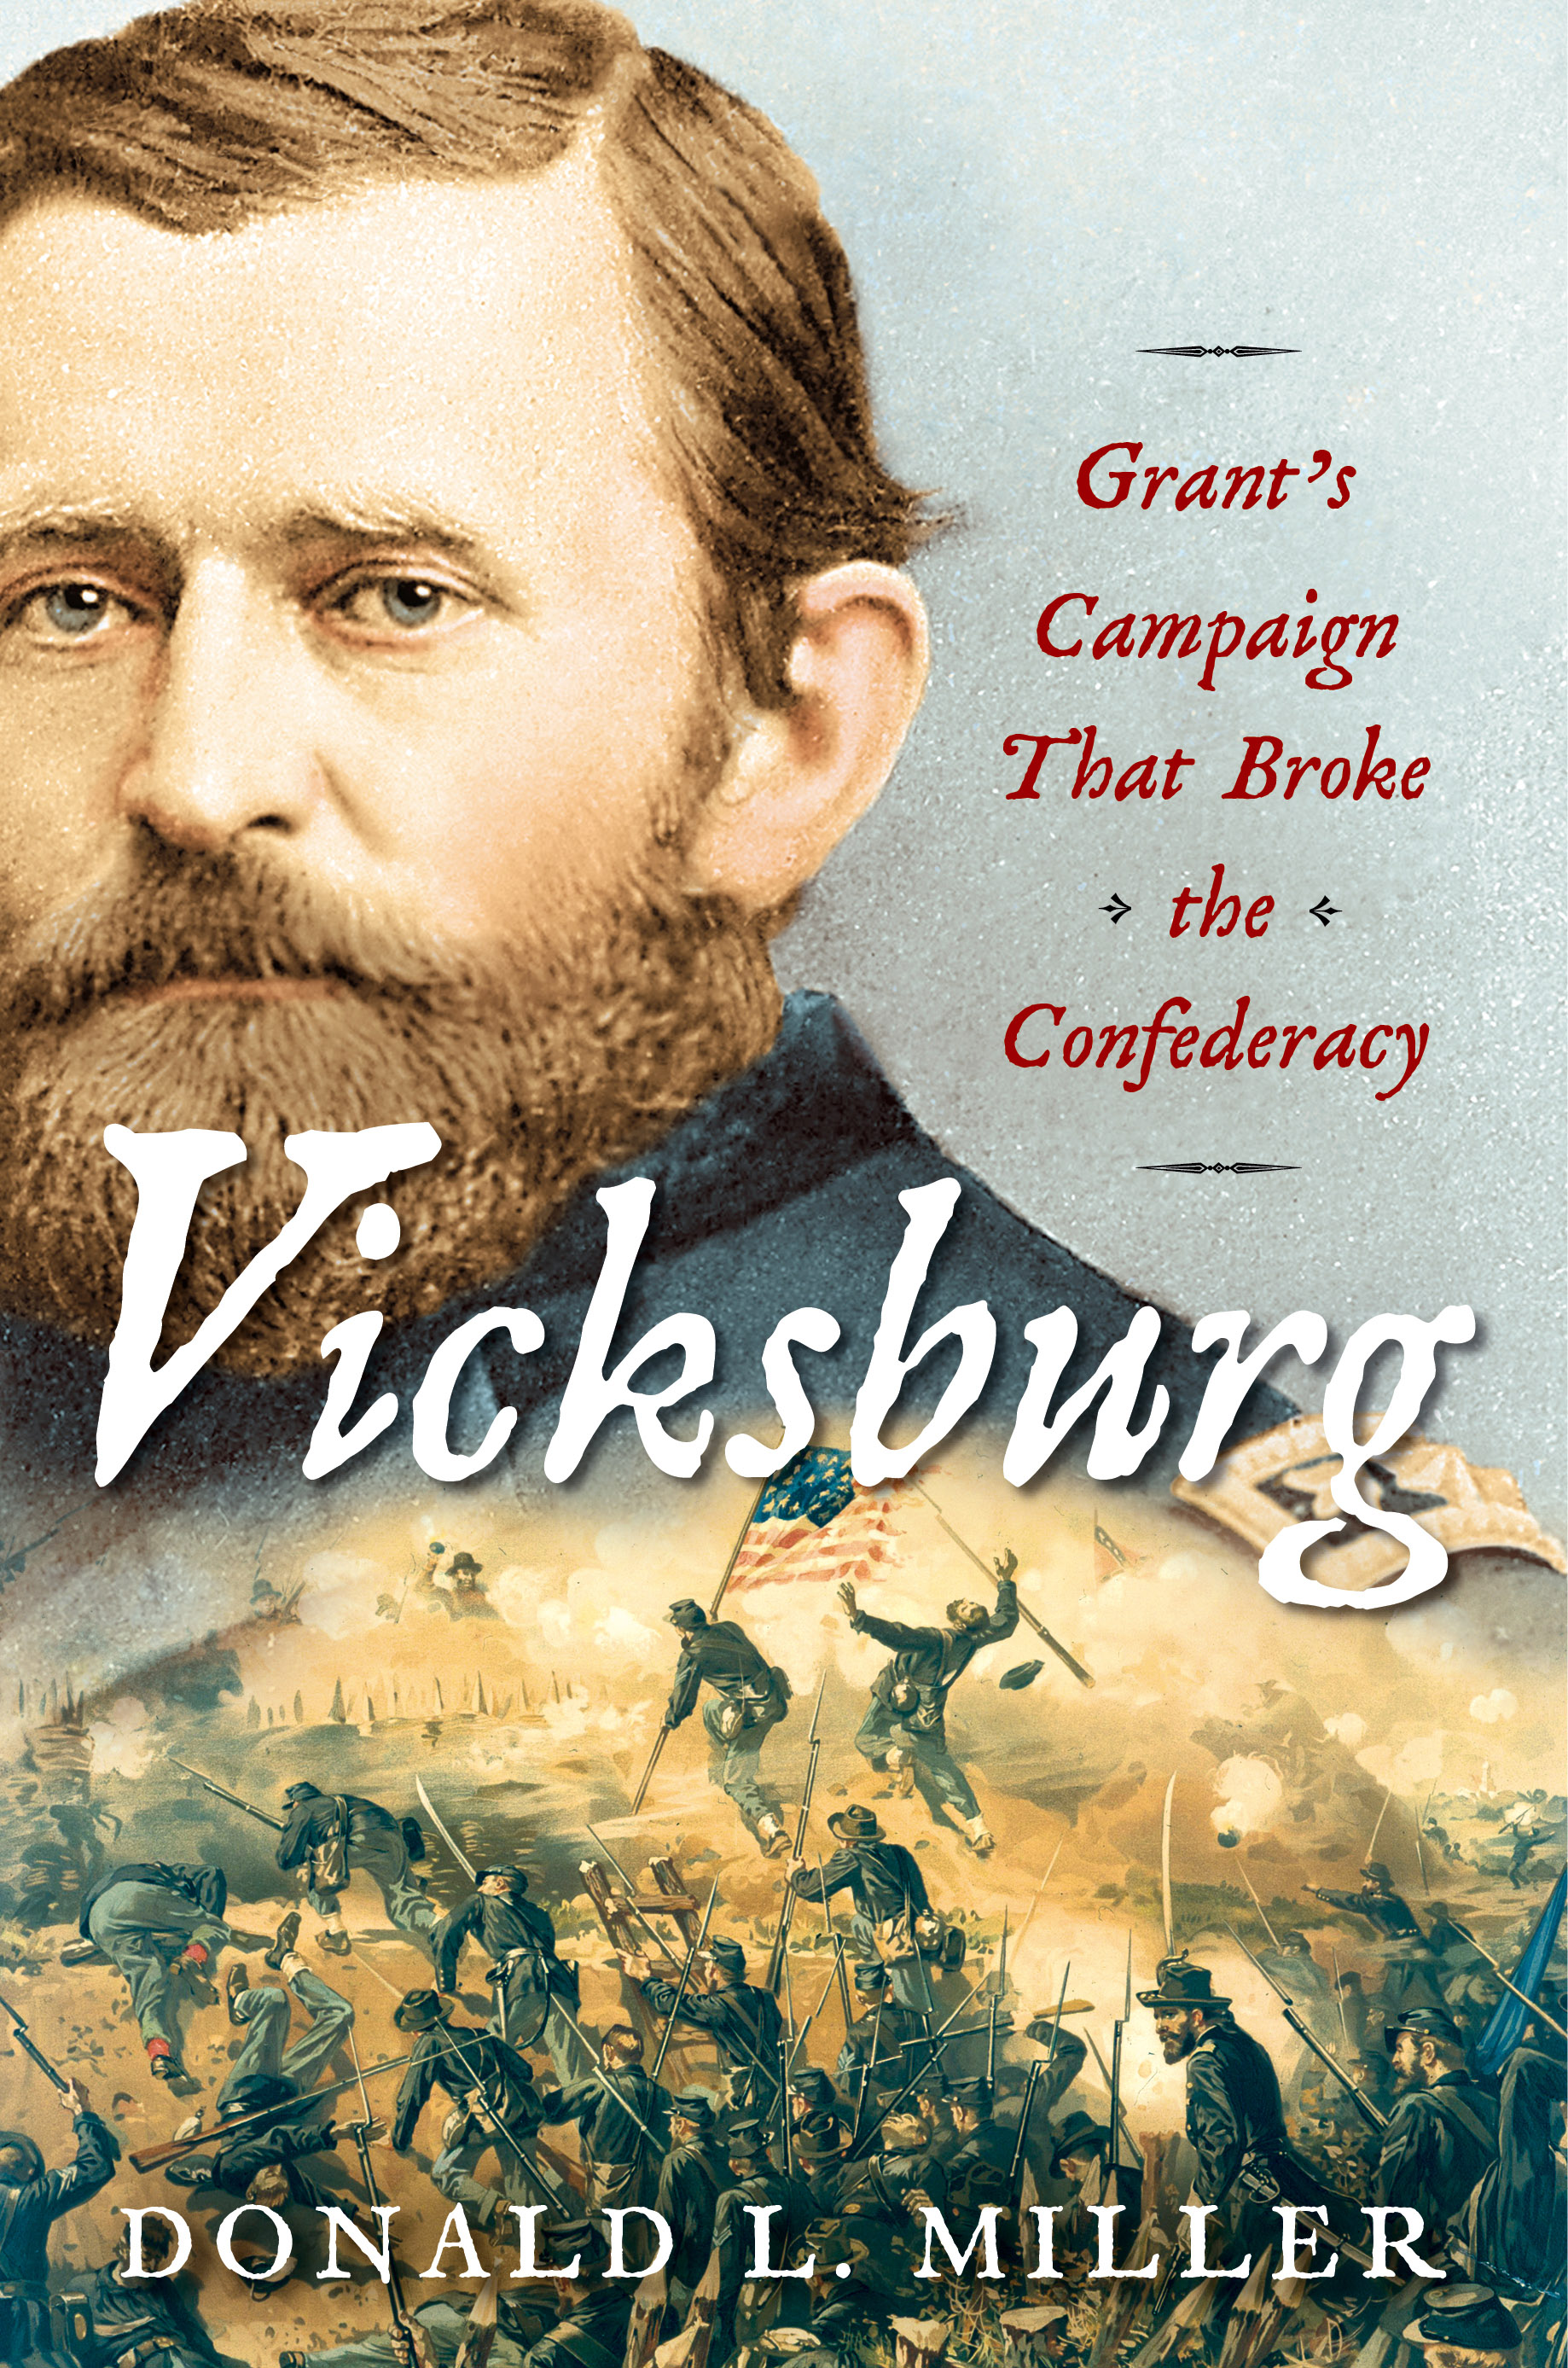 "Vicksburg" book cover